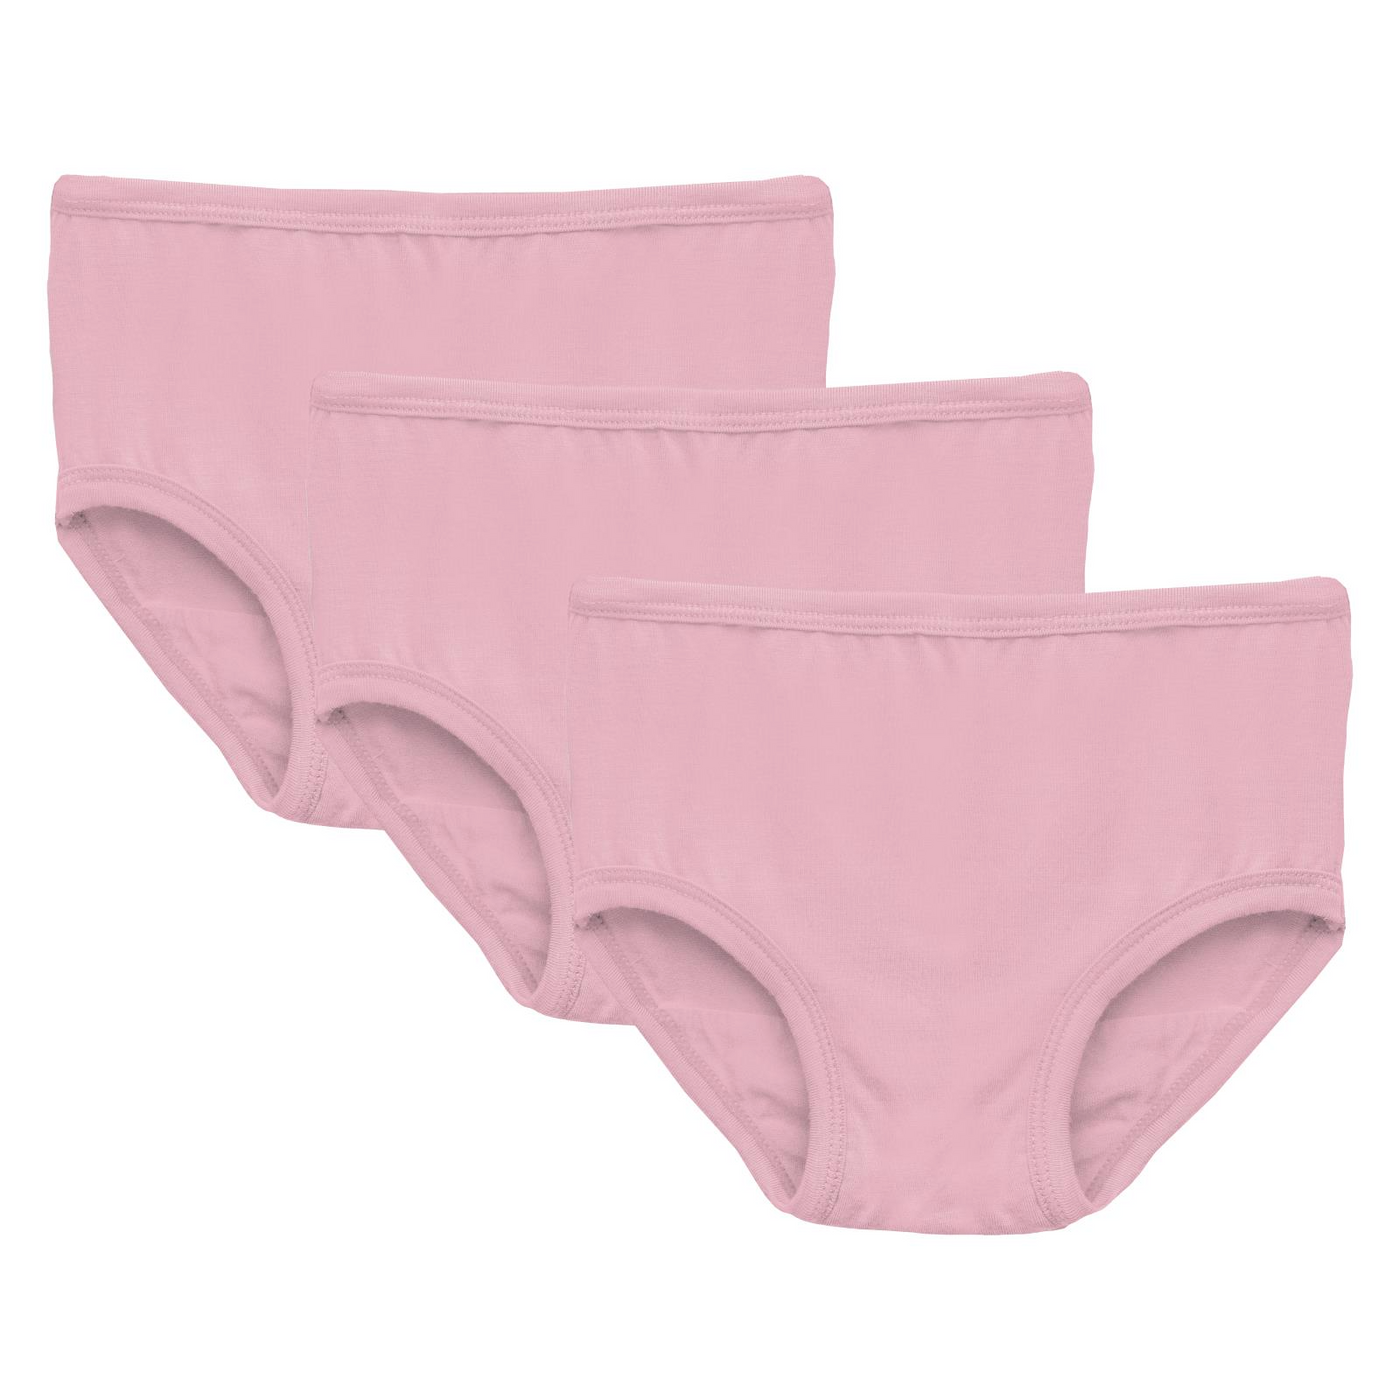 Kickee Pants Girl's Underwear Set of 3: Solid Cake Pop